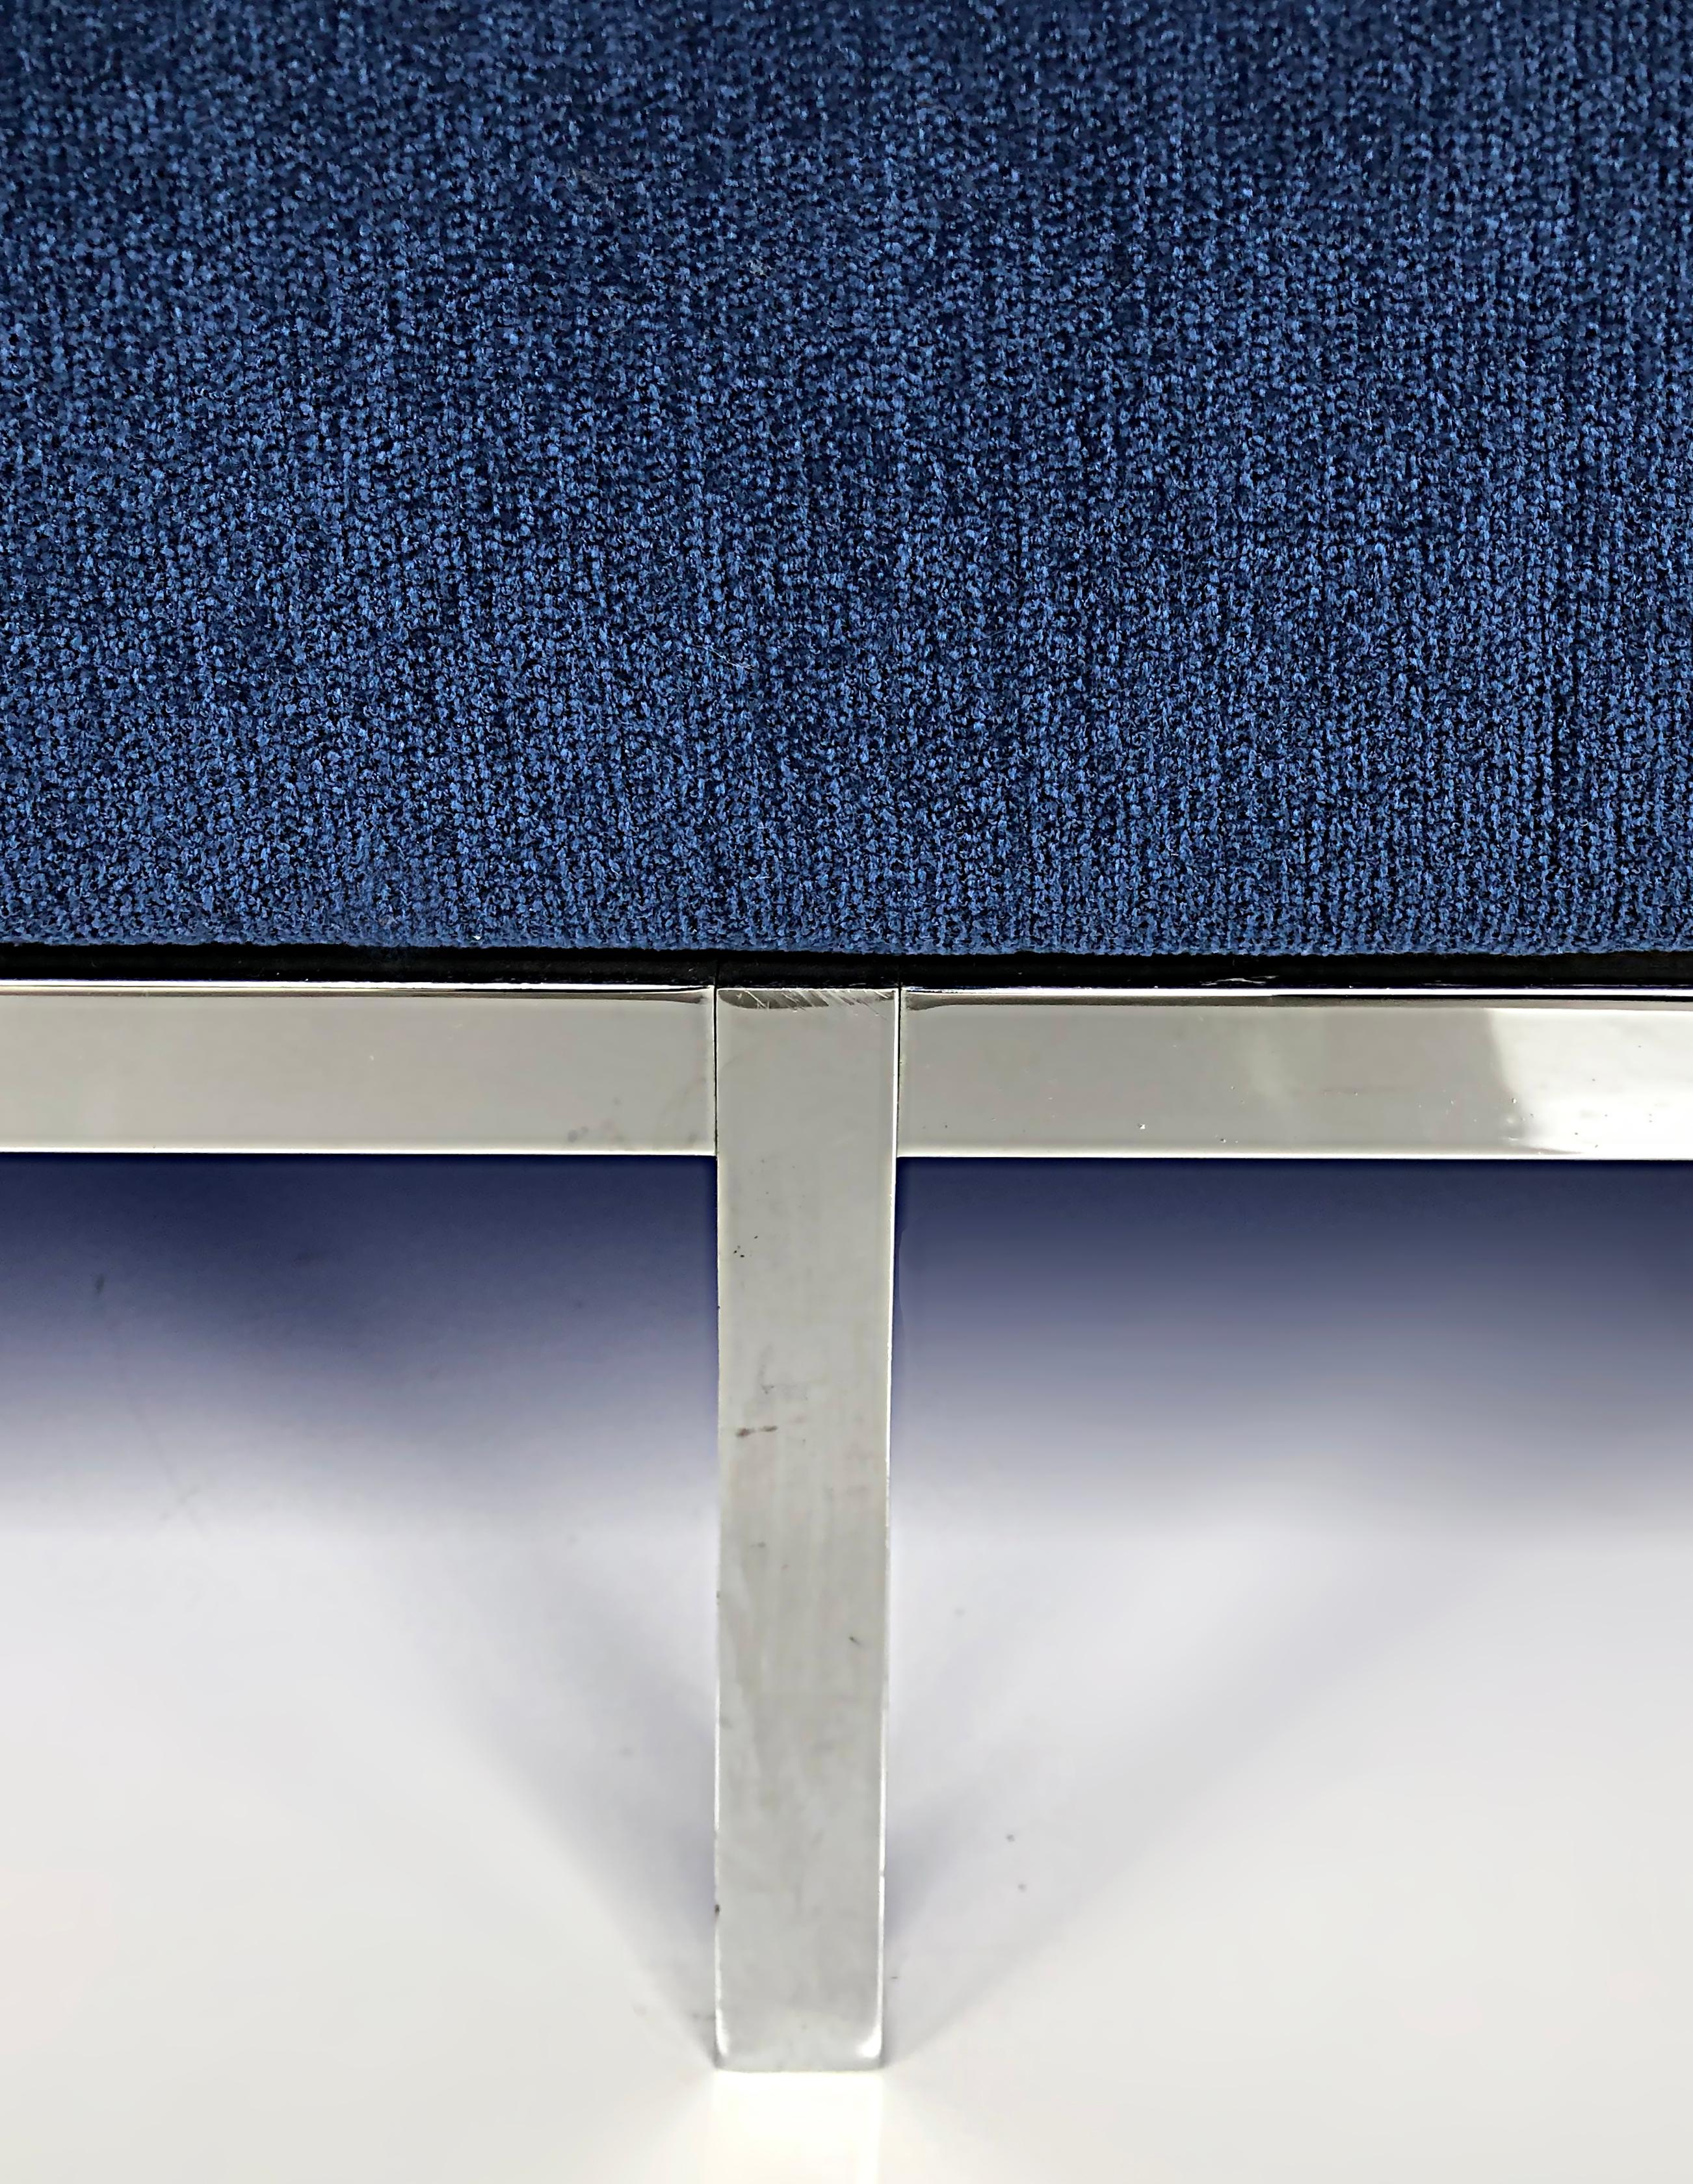 Stainless Steel Florence Knoll Associates Mid-Century Sofa, New Kravet Fabric Upholstery